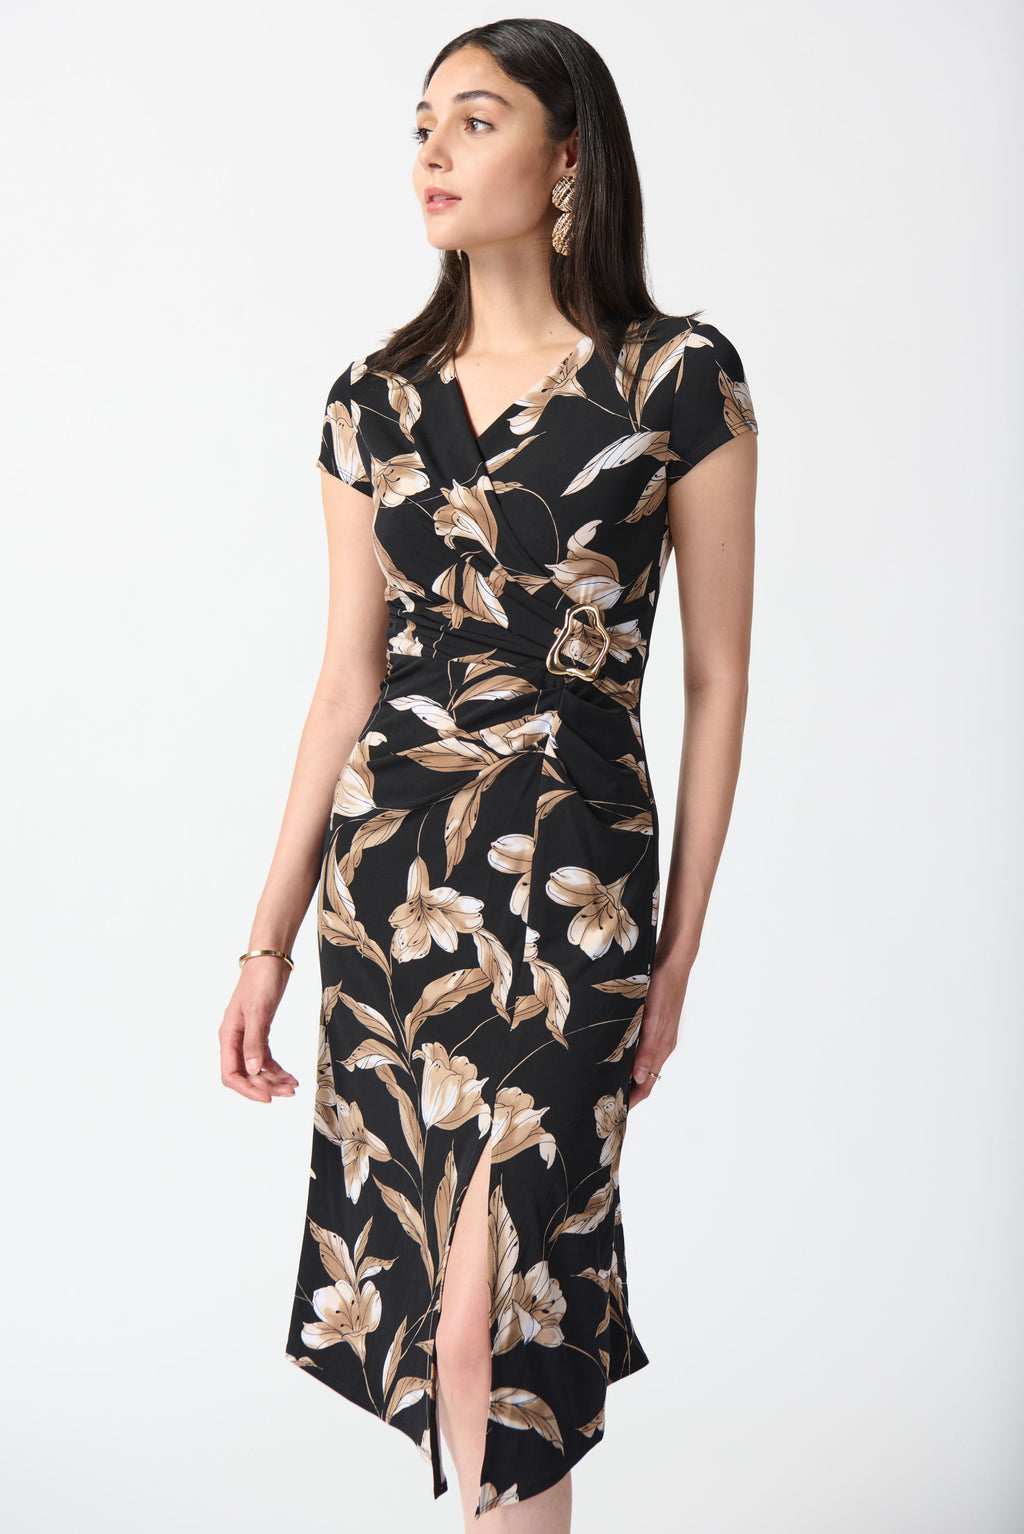 Joseph Ribkoff Black/Multi Floral Print Fit and Flare Dress Style 242190